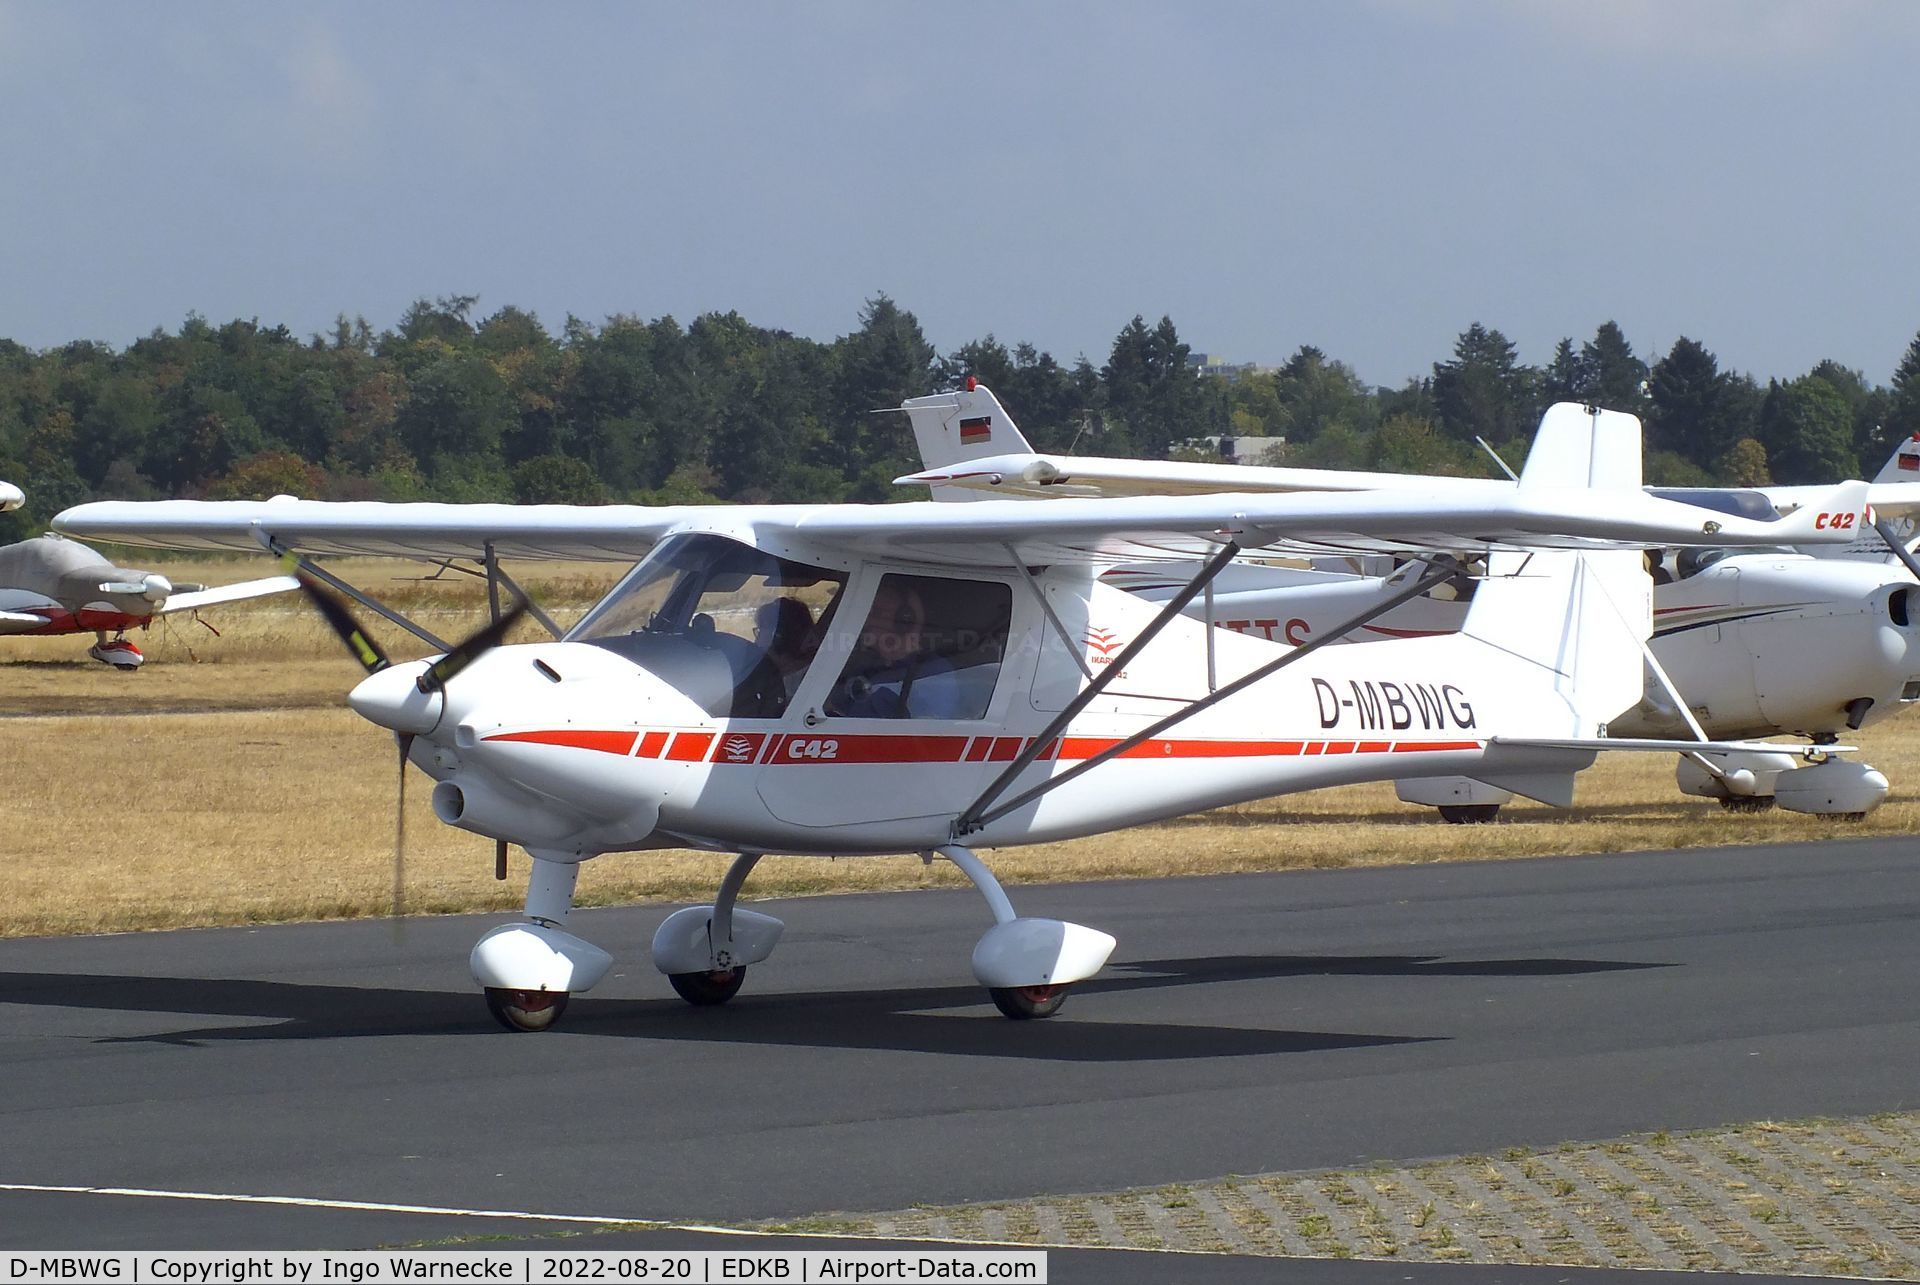 D-MBWG, Comco Ikarus C42 C/N not found_D-MBWG, Comco  Ikarus C42 at Bonn-Hangelar airfield during the Grumman Fly-in 2022